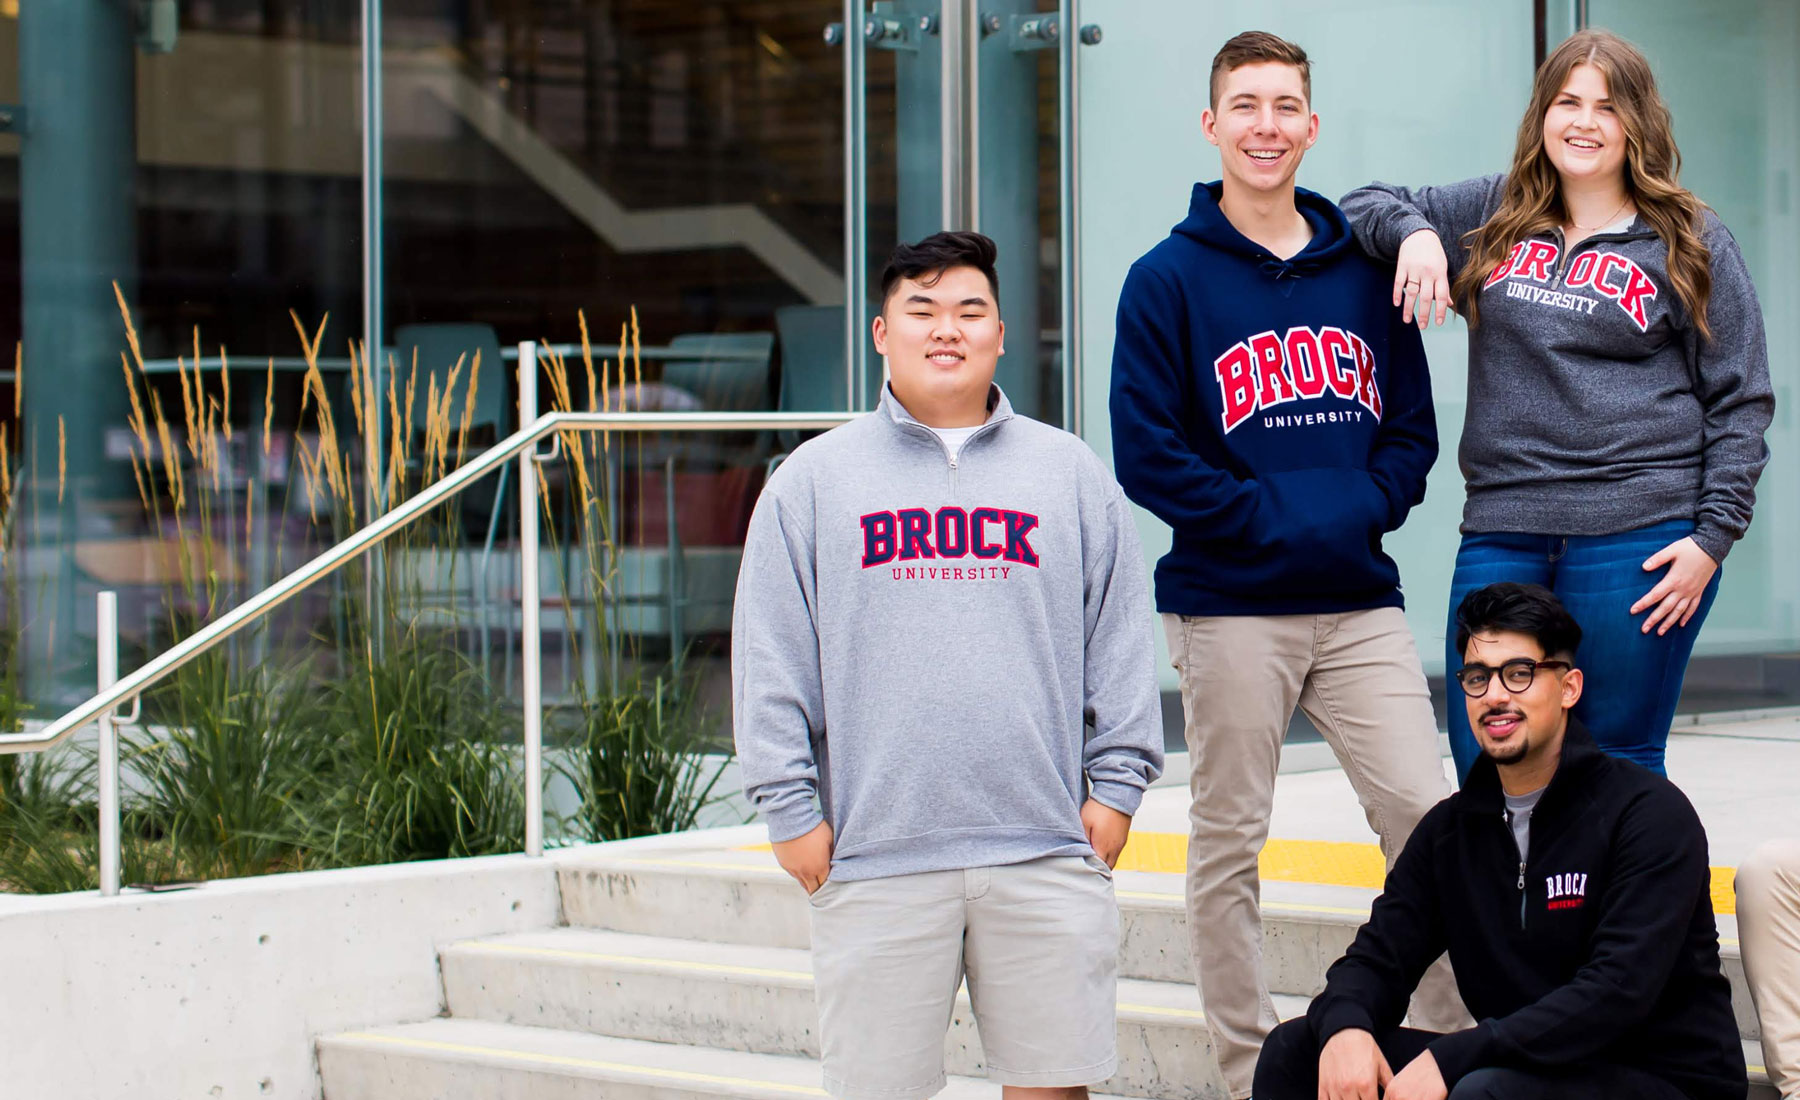 Students pose on the steps of Brock University wearing Brock branded hoodies and sweatshirts. 